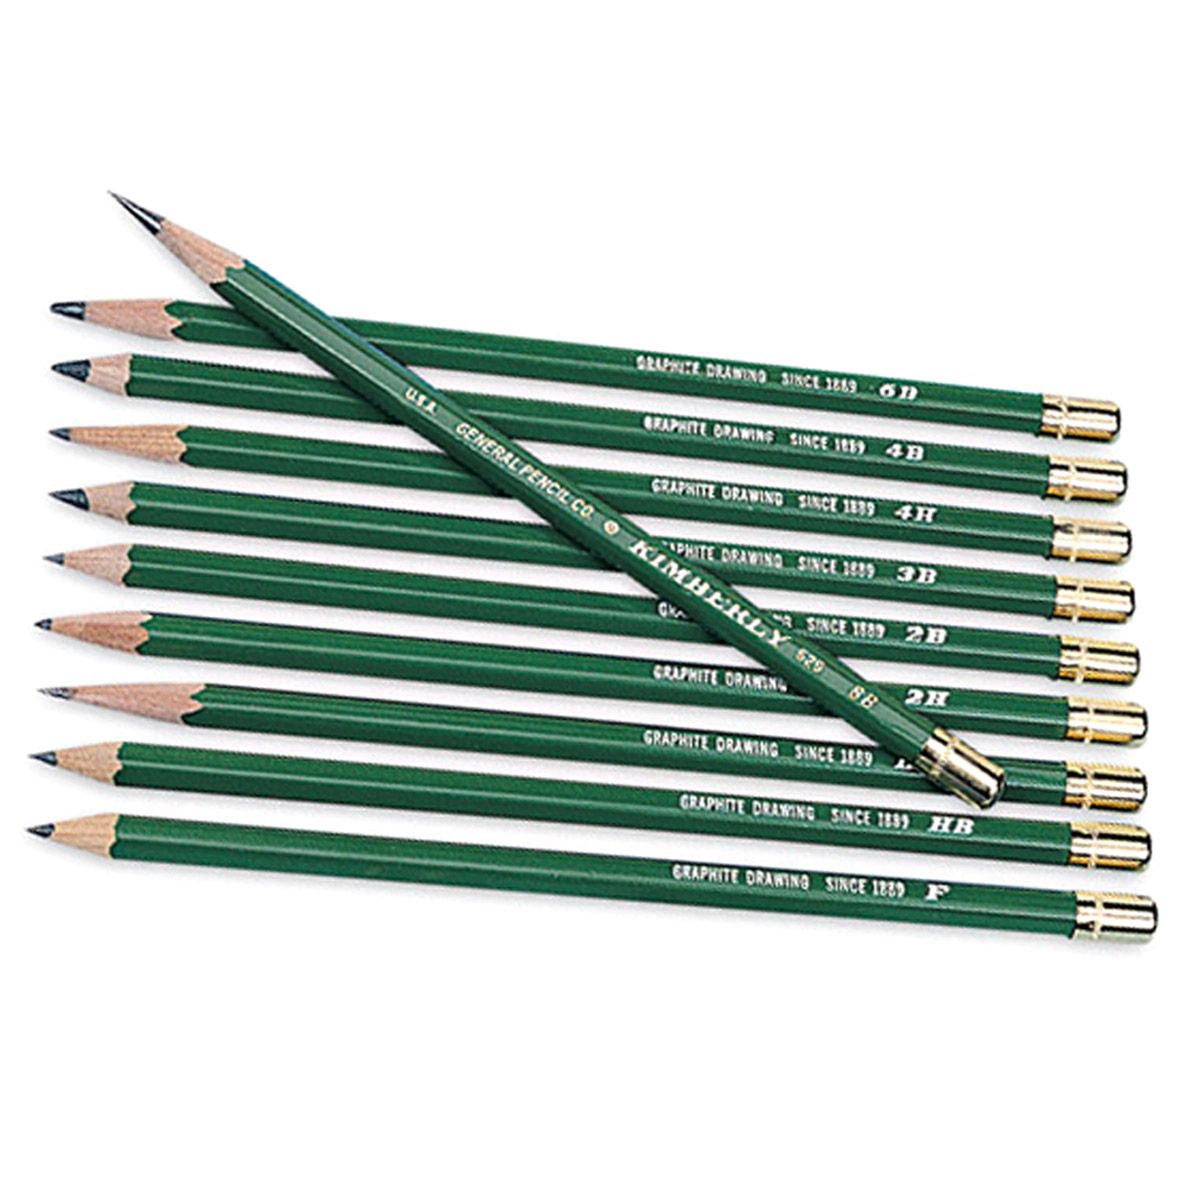 Kimberly Premium Graphite Drawing Pencils